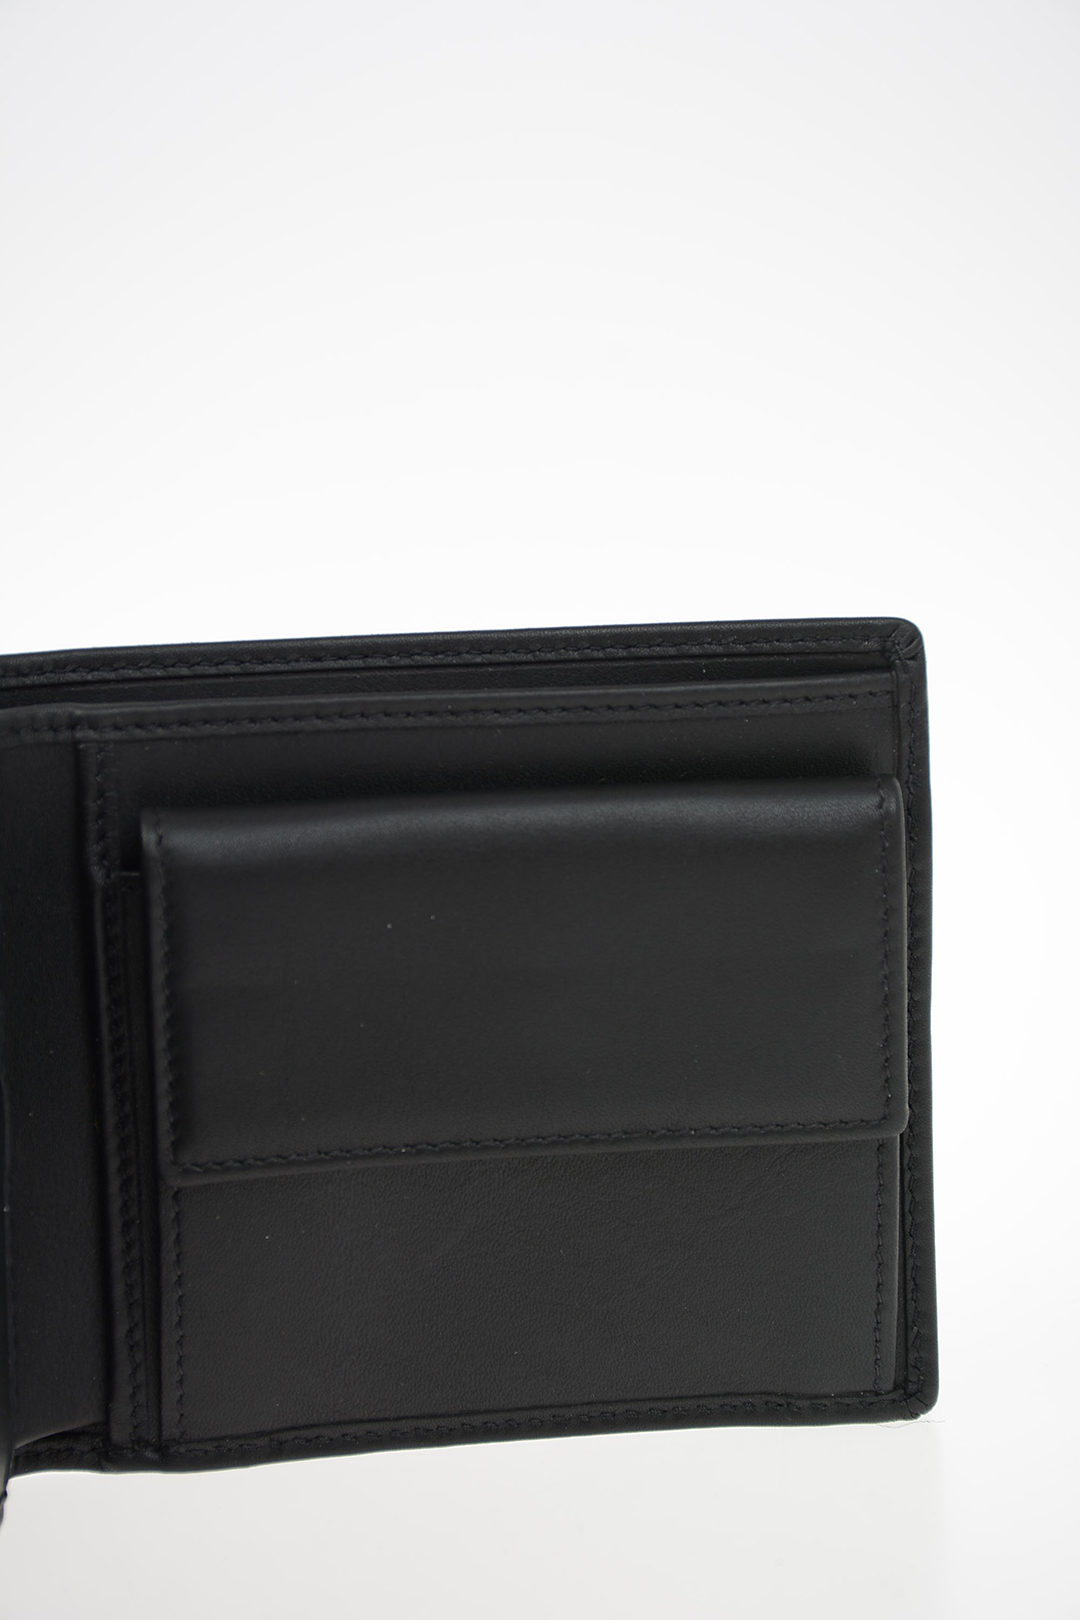 Giorgio Armani Men's Bi-Fold leather walletCervoBlack